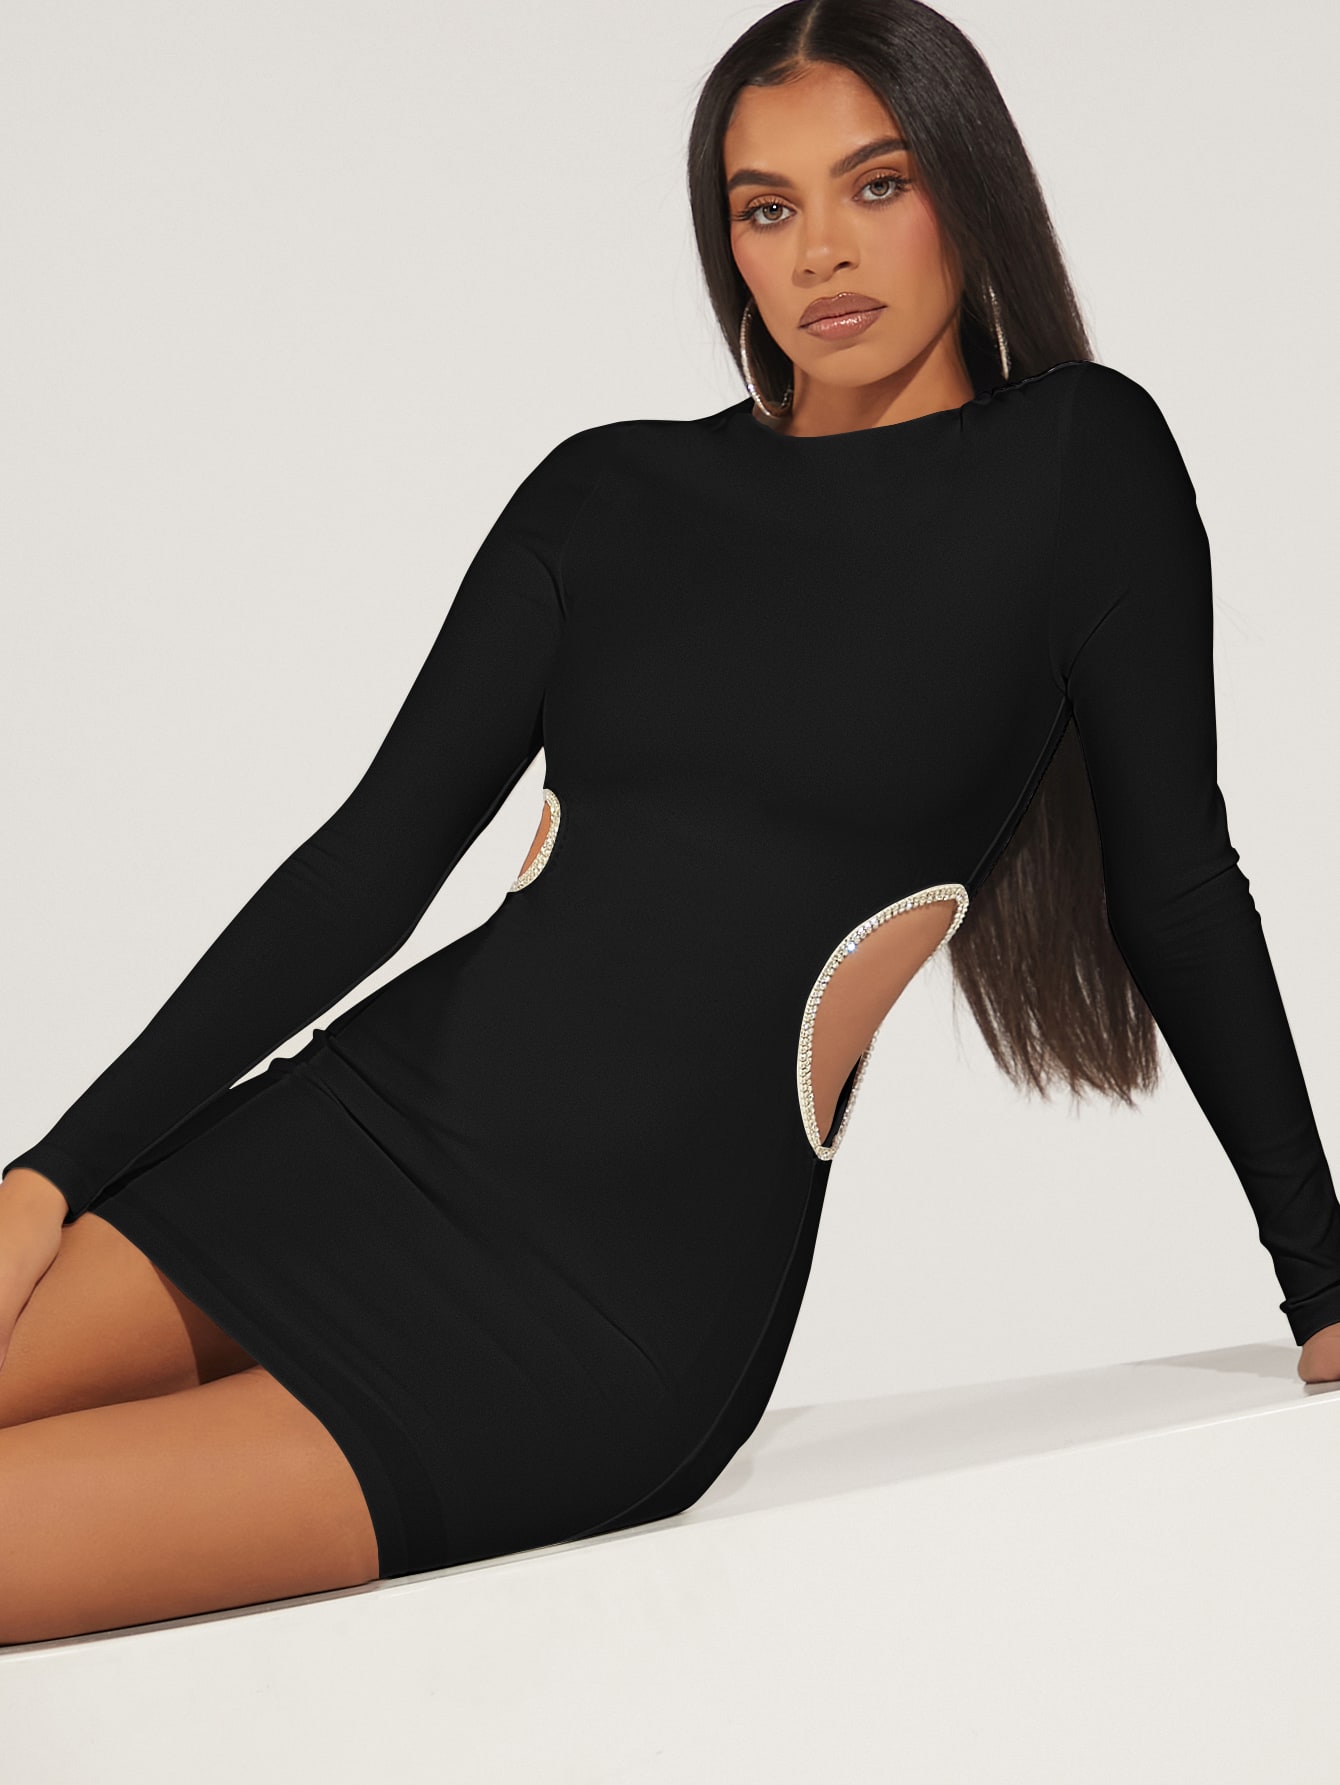 Reviena Midi Dress - Cut Out Cowl Neck Dress in Black | Showpo USA